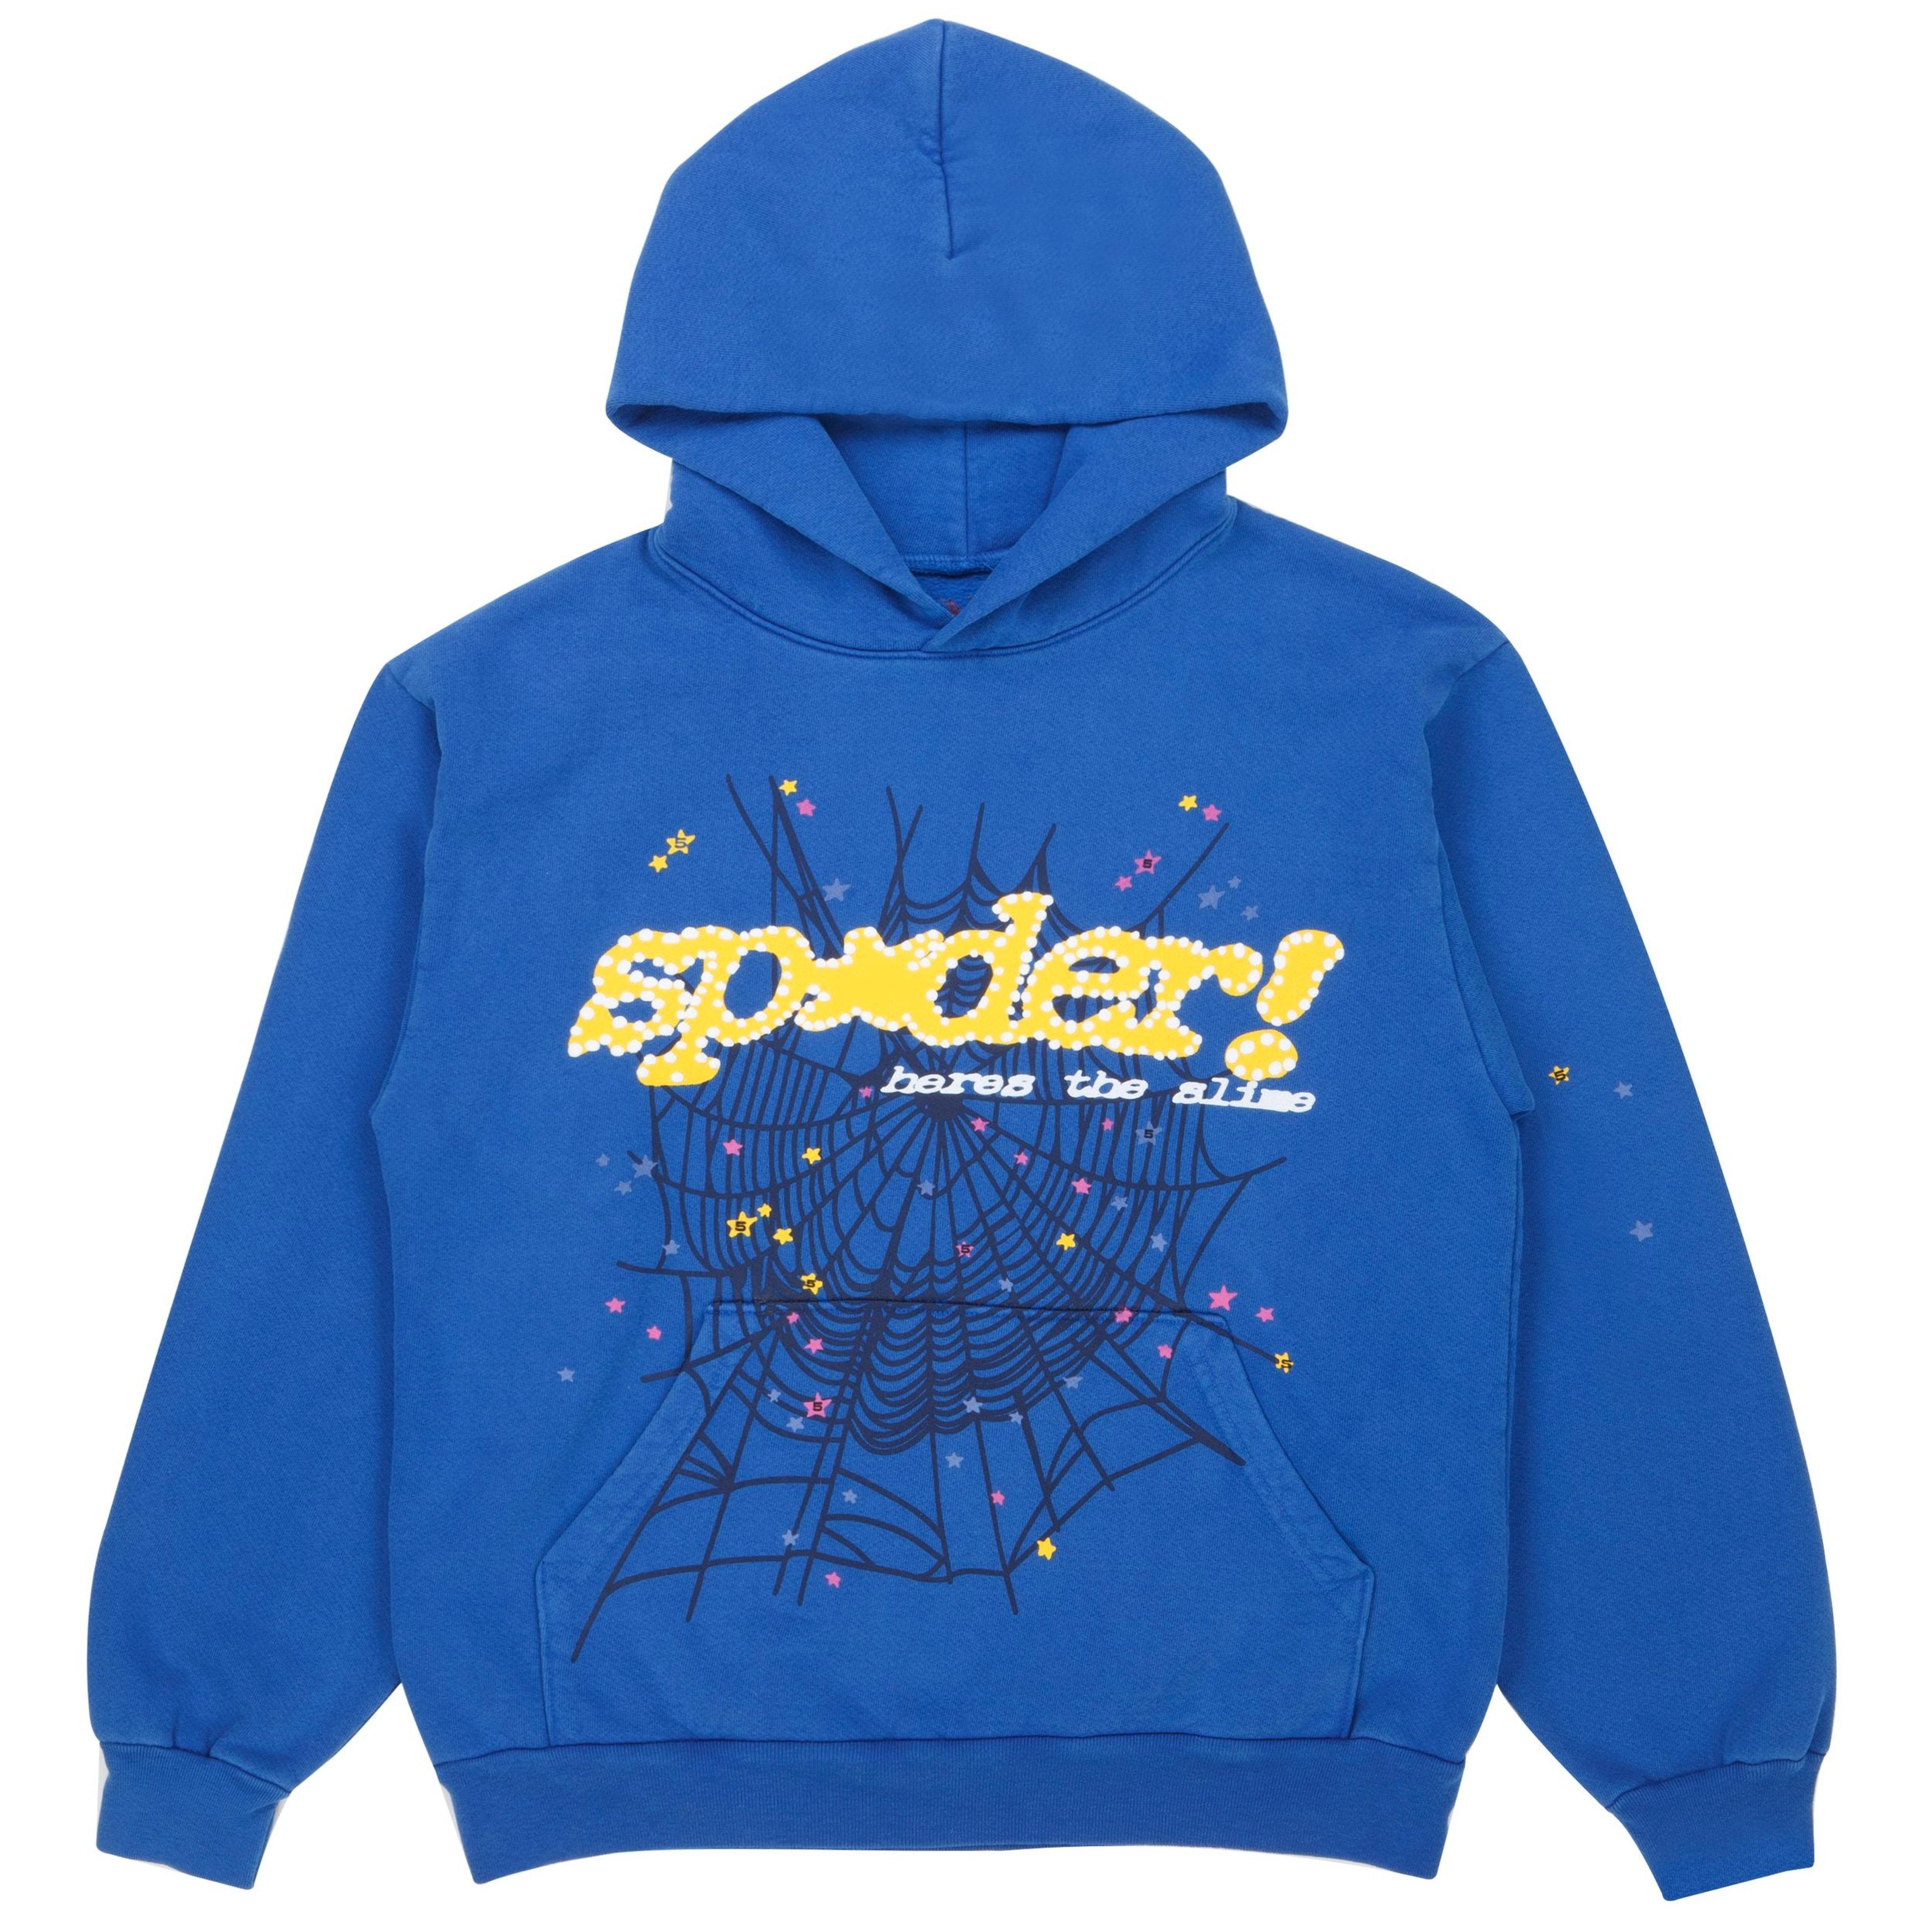 Sp5der Worldwide TC Sweatshirt Marina Blue